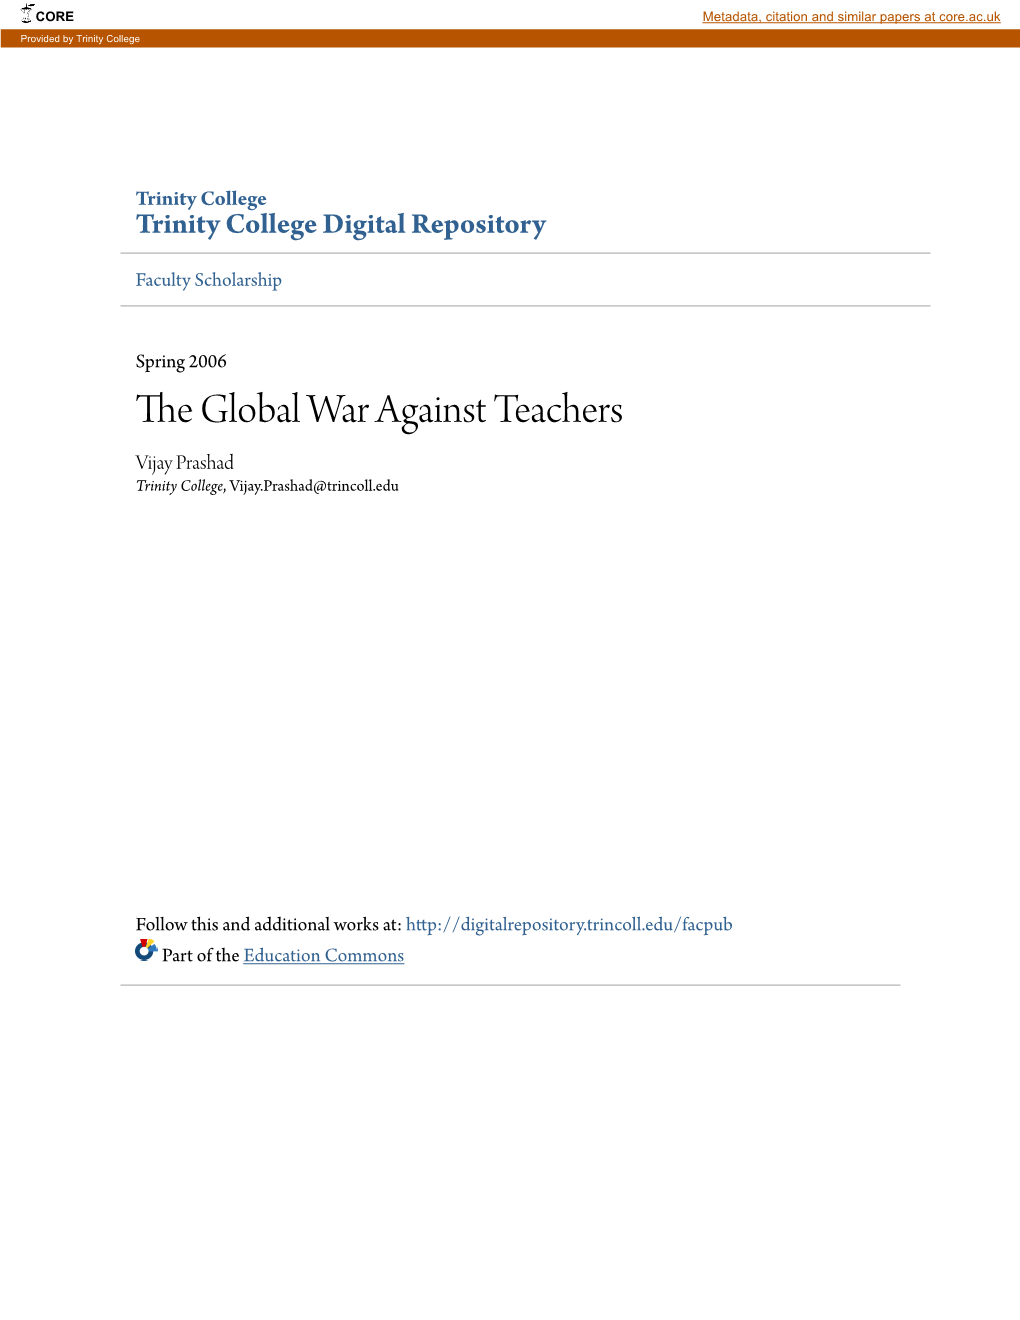 The Global War Against Teachers Vijay Prashad Trinity College, Vijay.Prashad@Trincoll.Edu